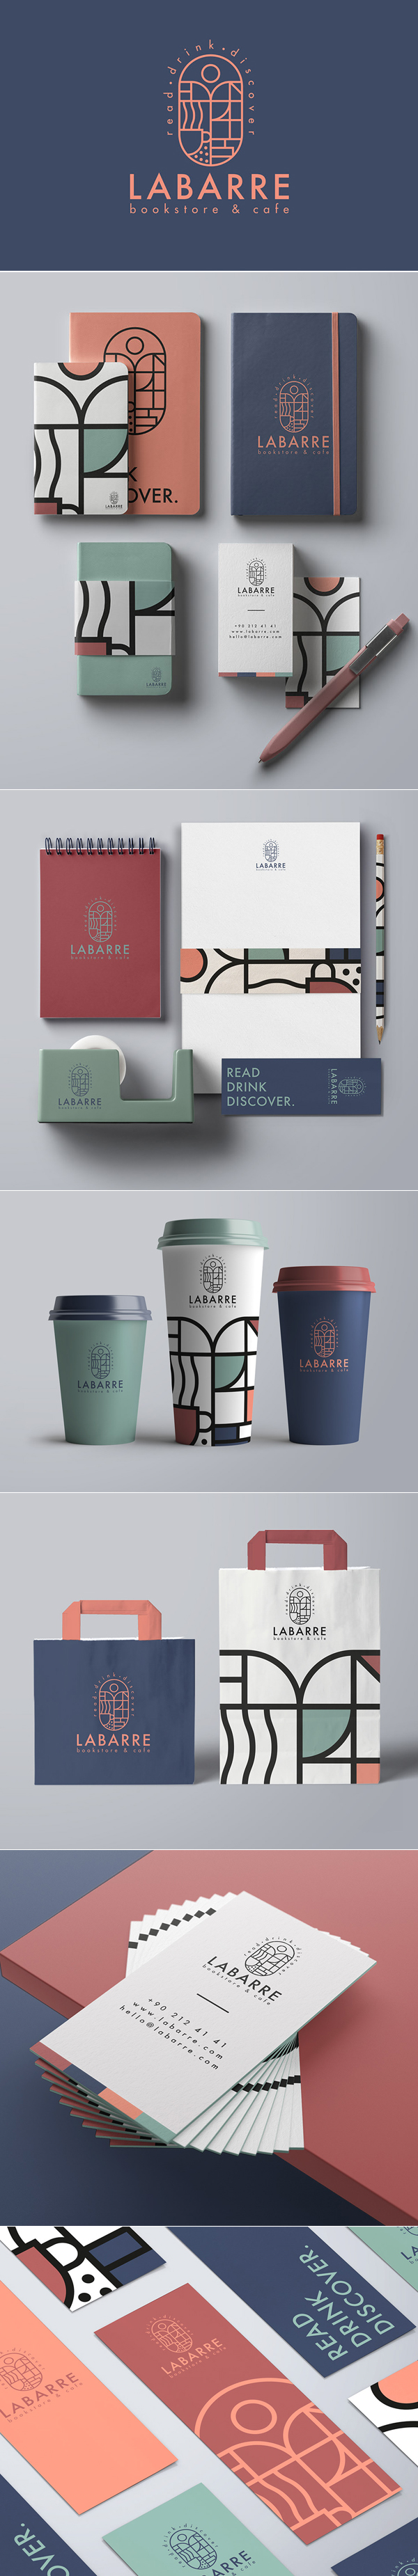 Branding: Labarre Bookstore & Cafe Branding Design by ONTO Design Studio